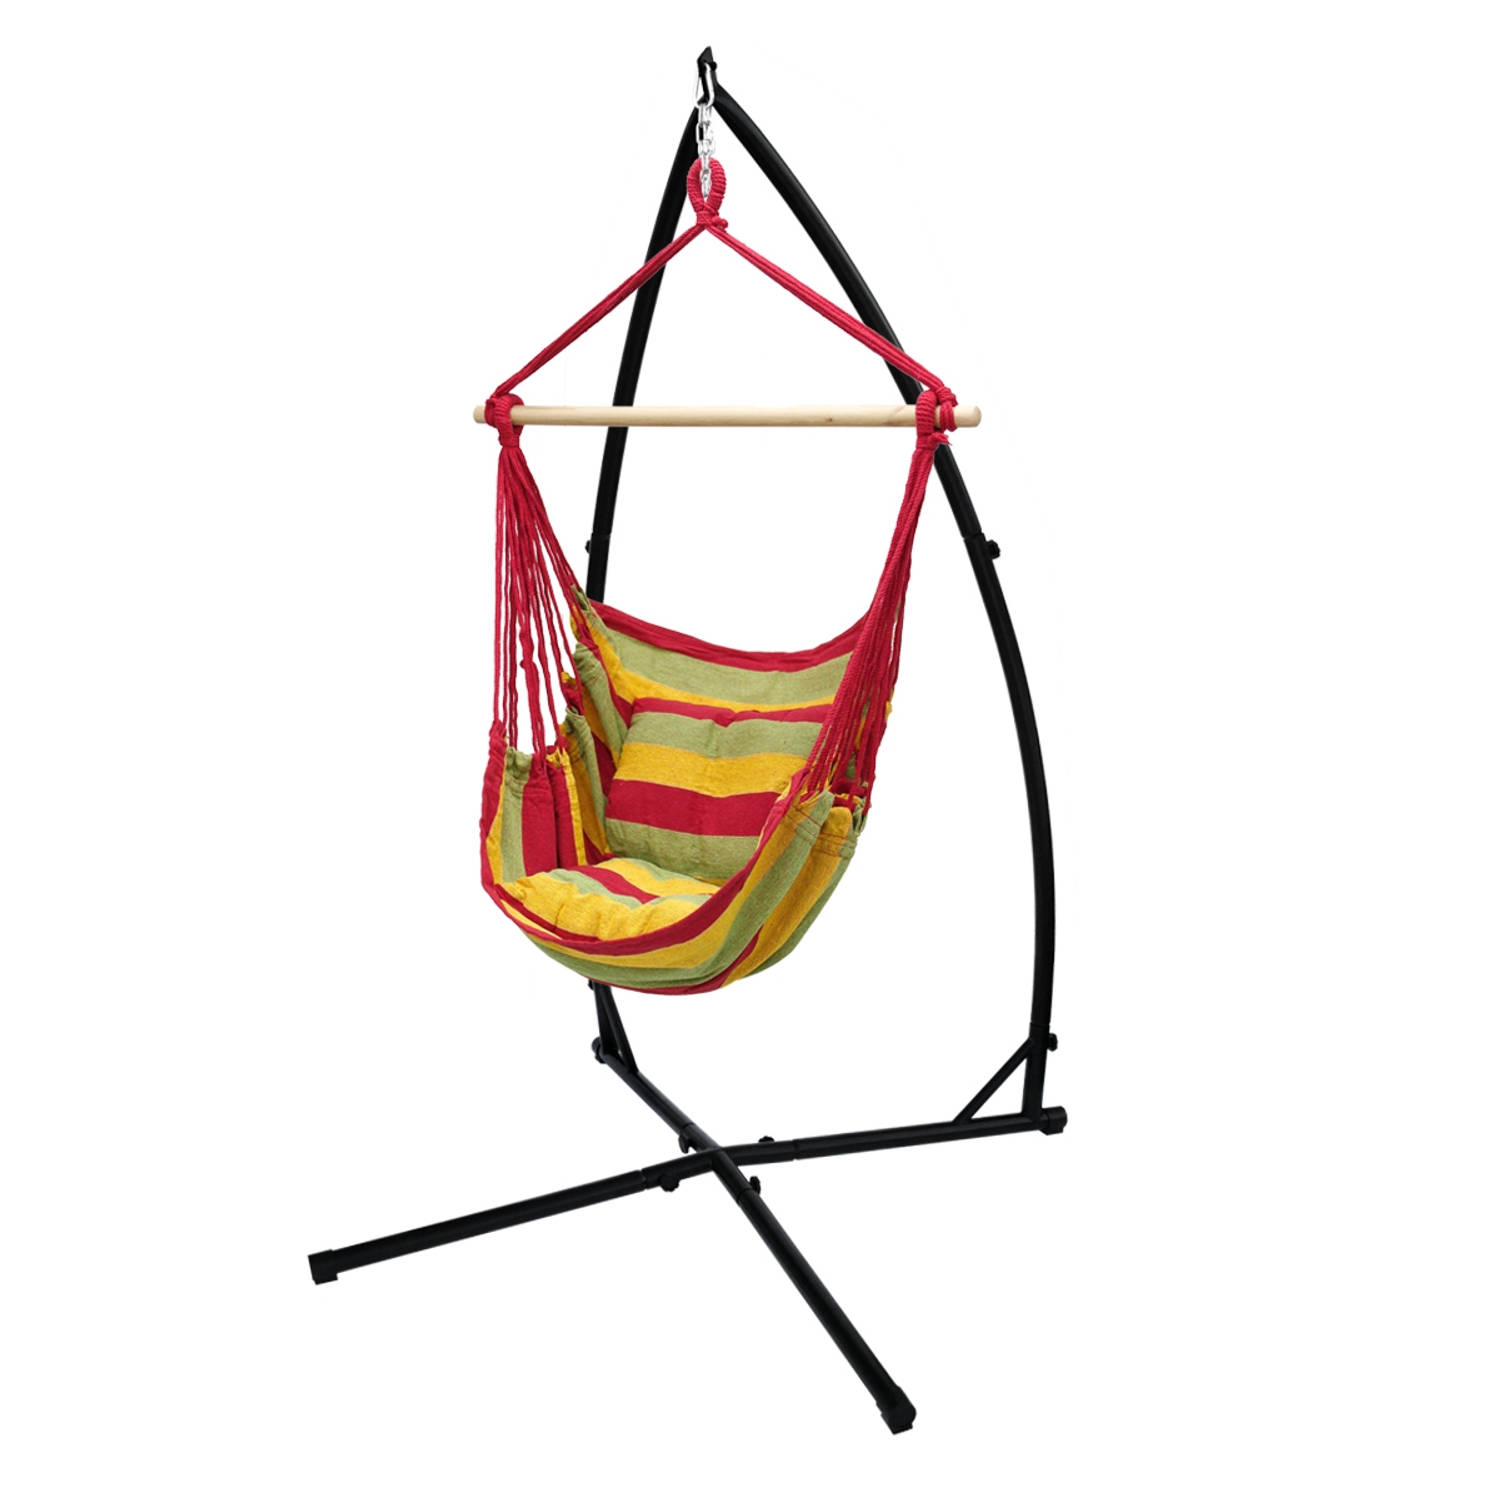 Hangstoel van katoen/hard hout, rood/groen/geel, belastbaar tot 120 kg met metalen frame 210 cm incl. twee kussens